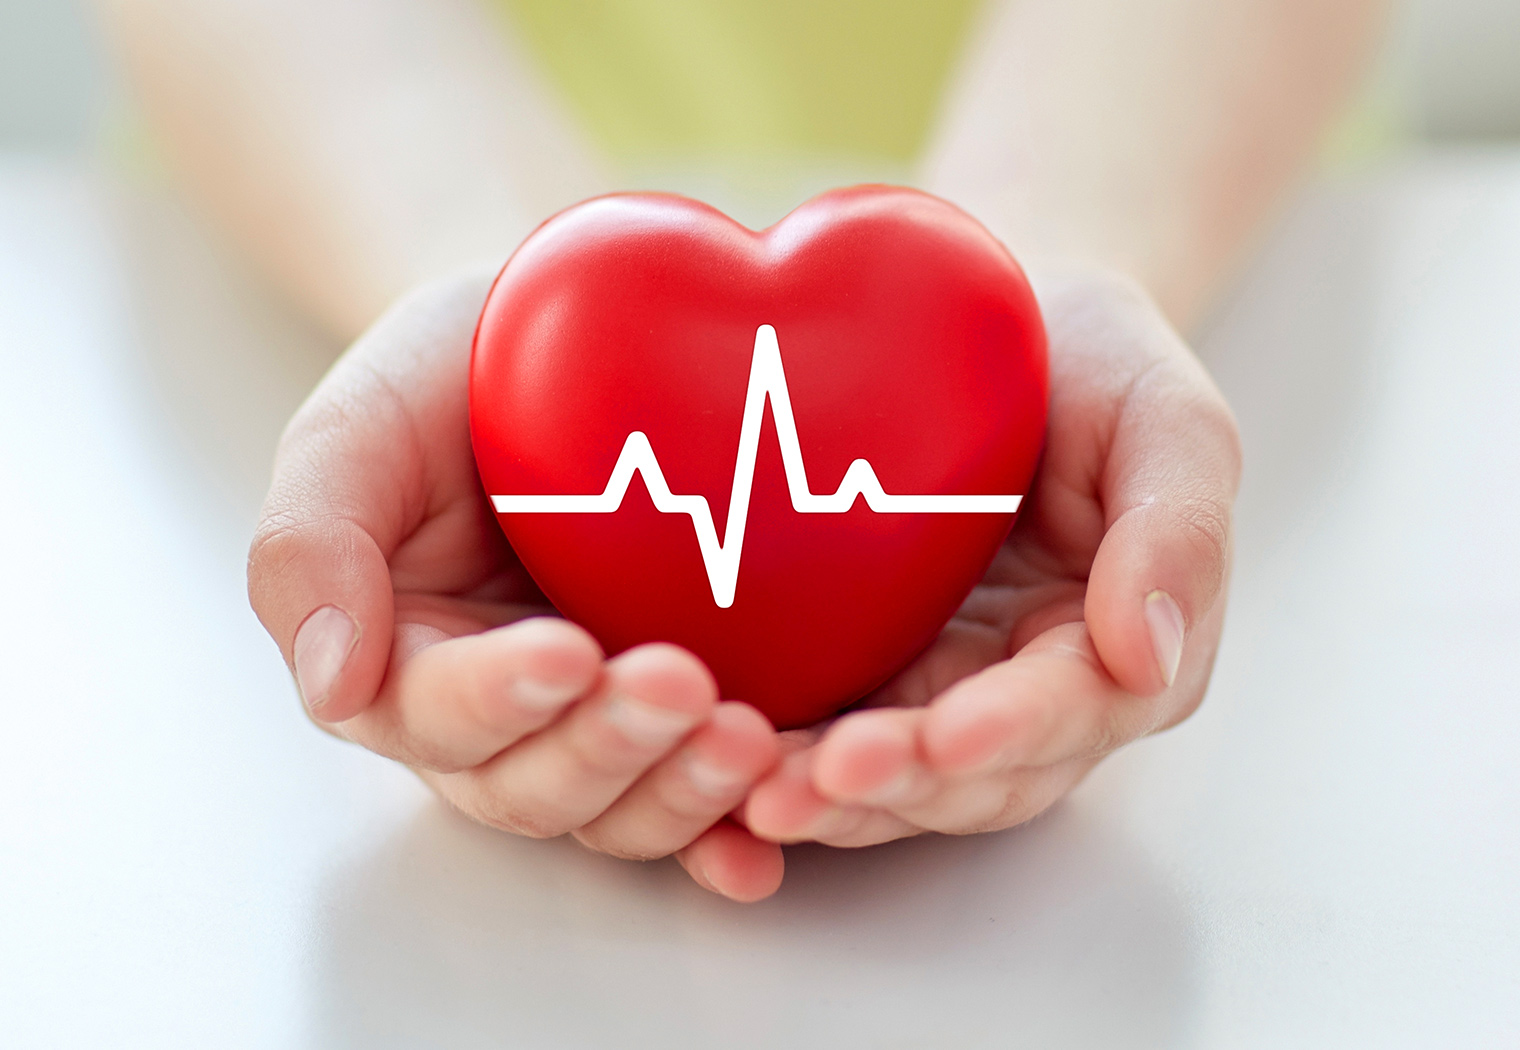 Krvni pritisak u infarkta miokarda: karakteristike, pravila i preporuke